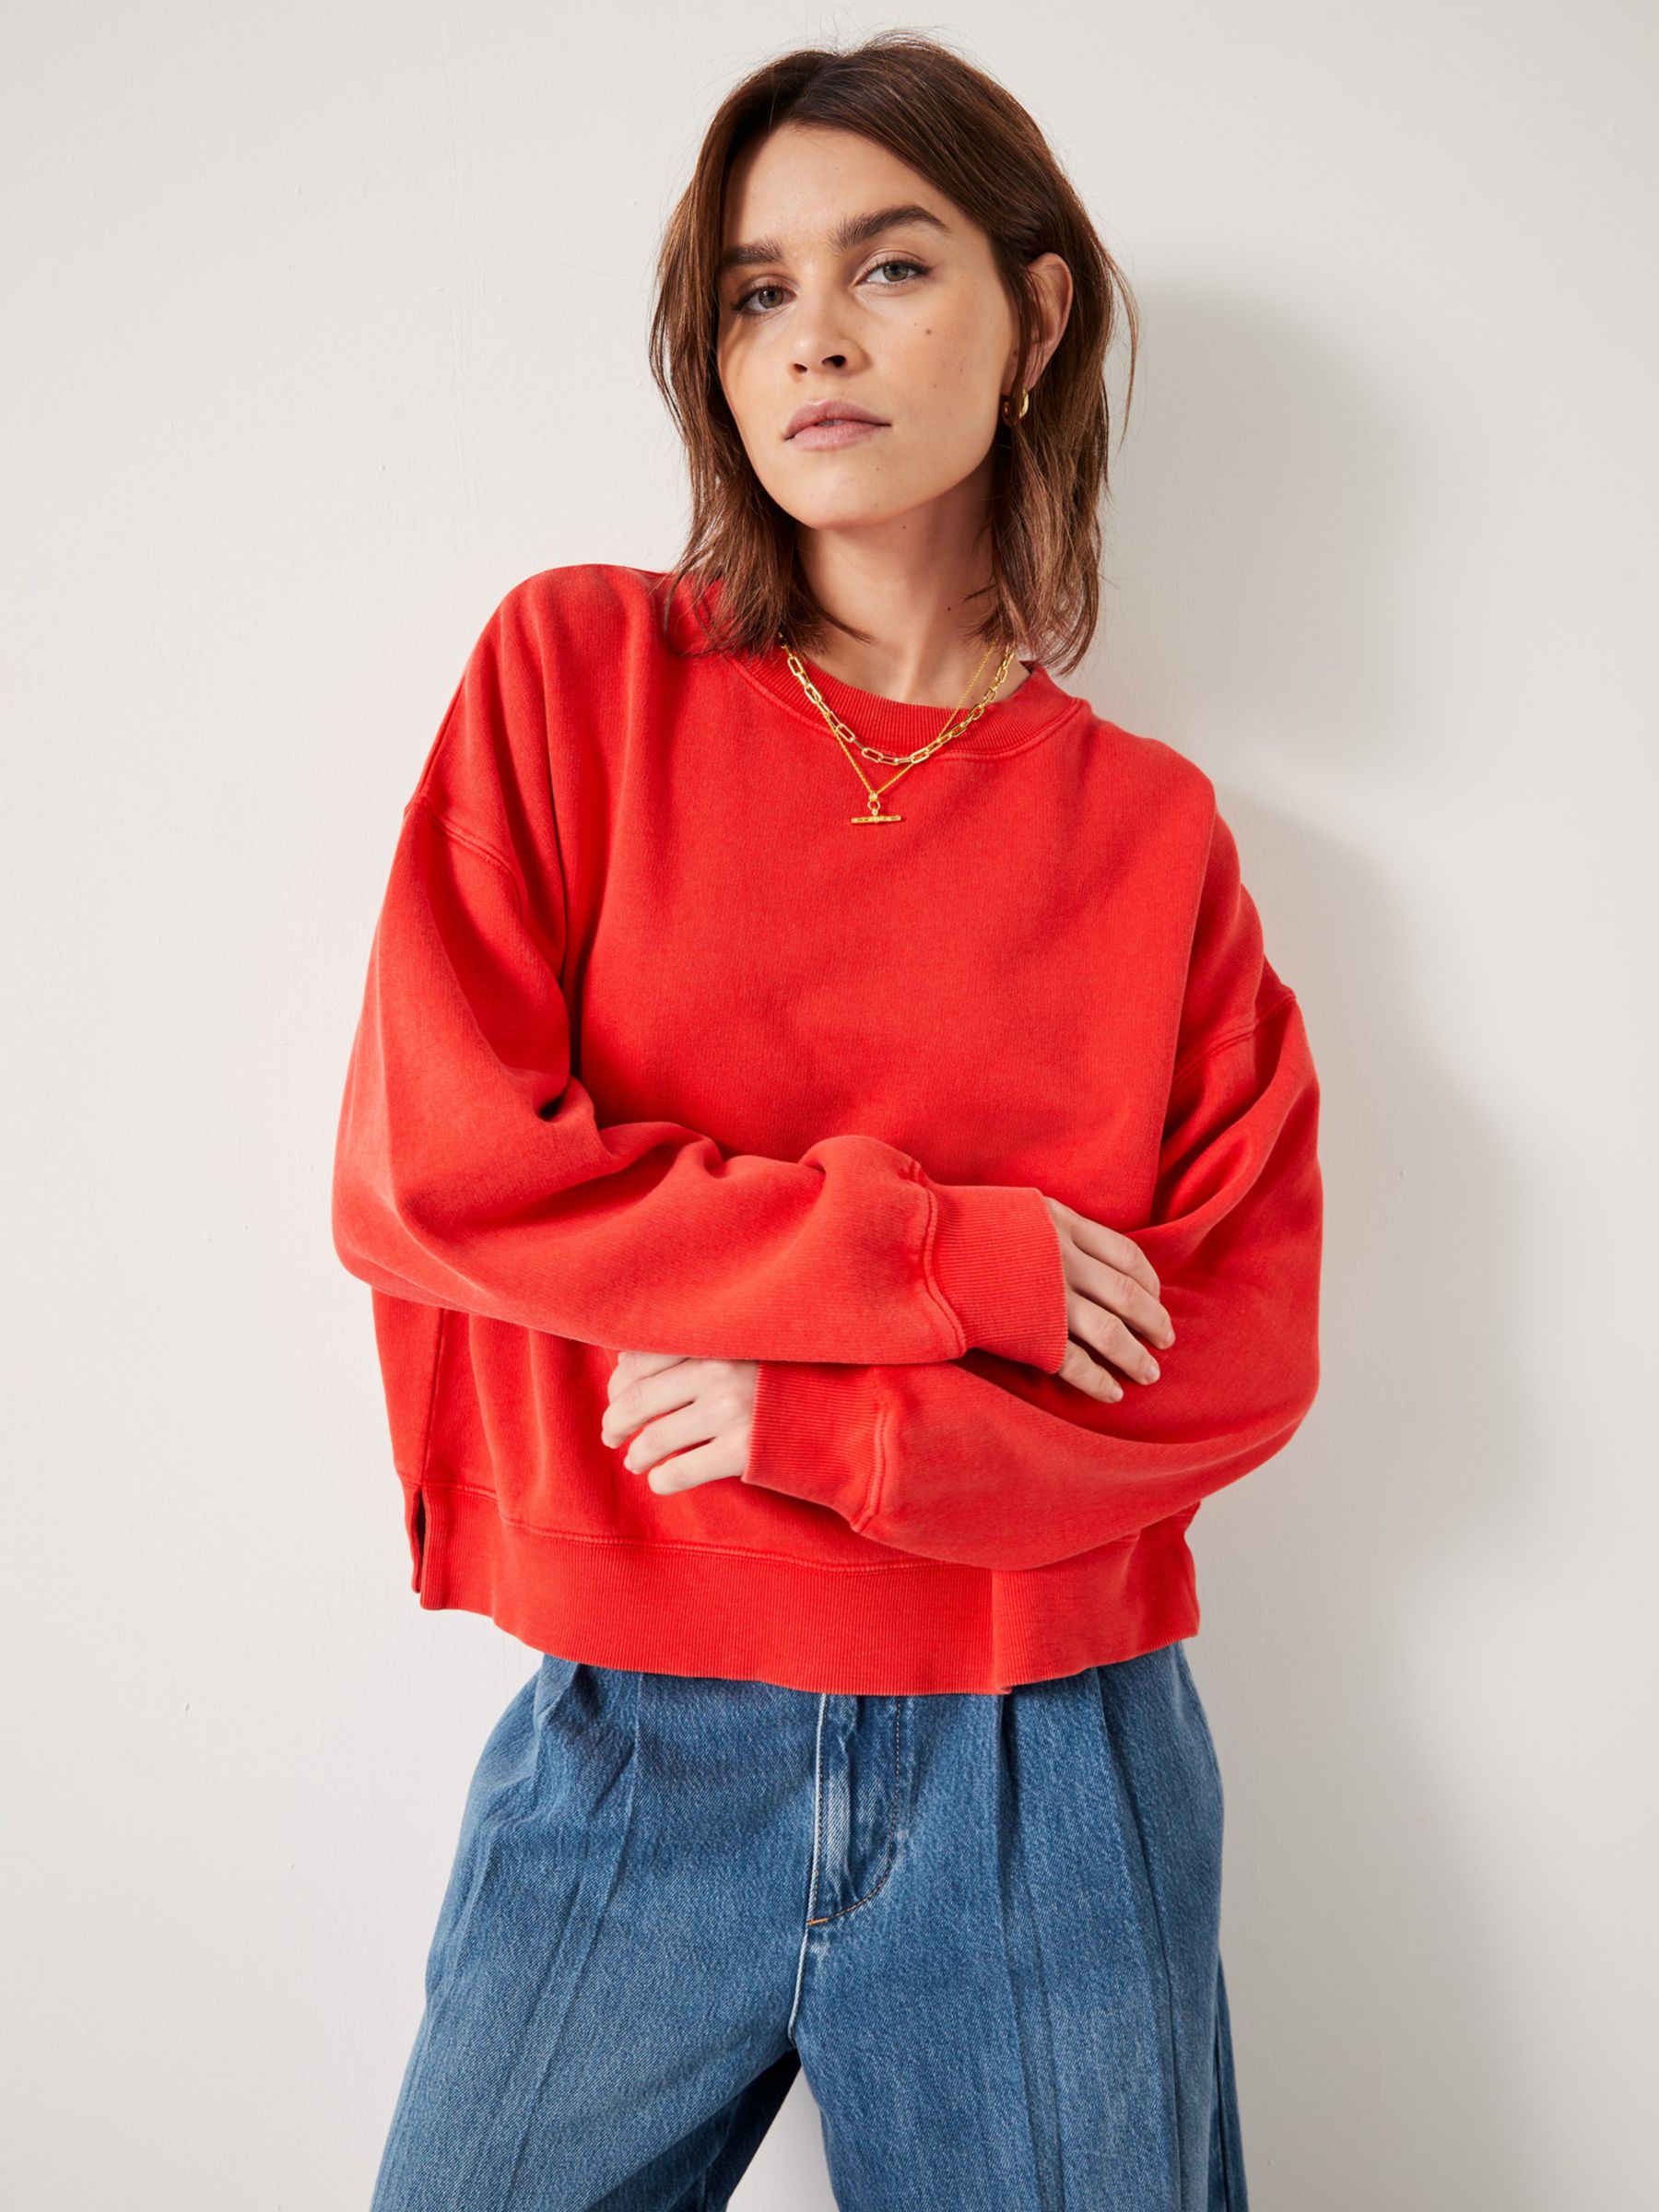 HUSH Rozanne Boxy Sweatshirt, Bright Red, L